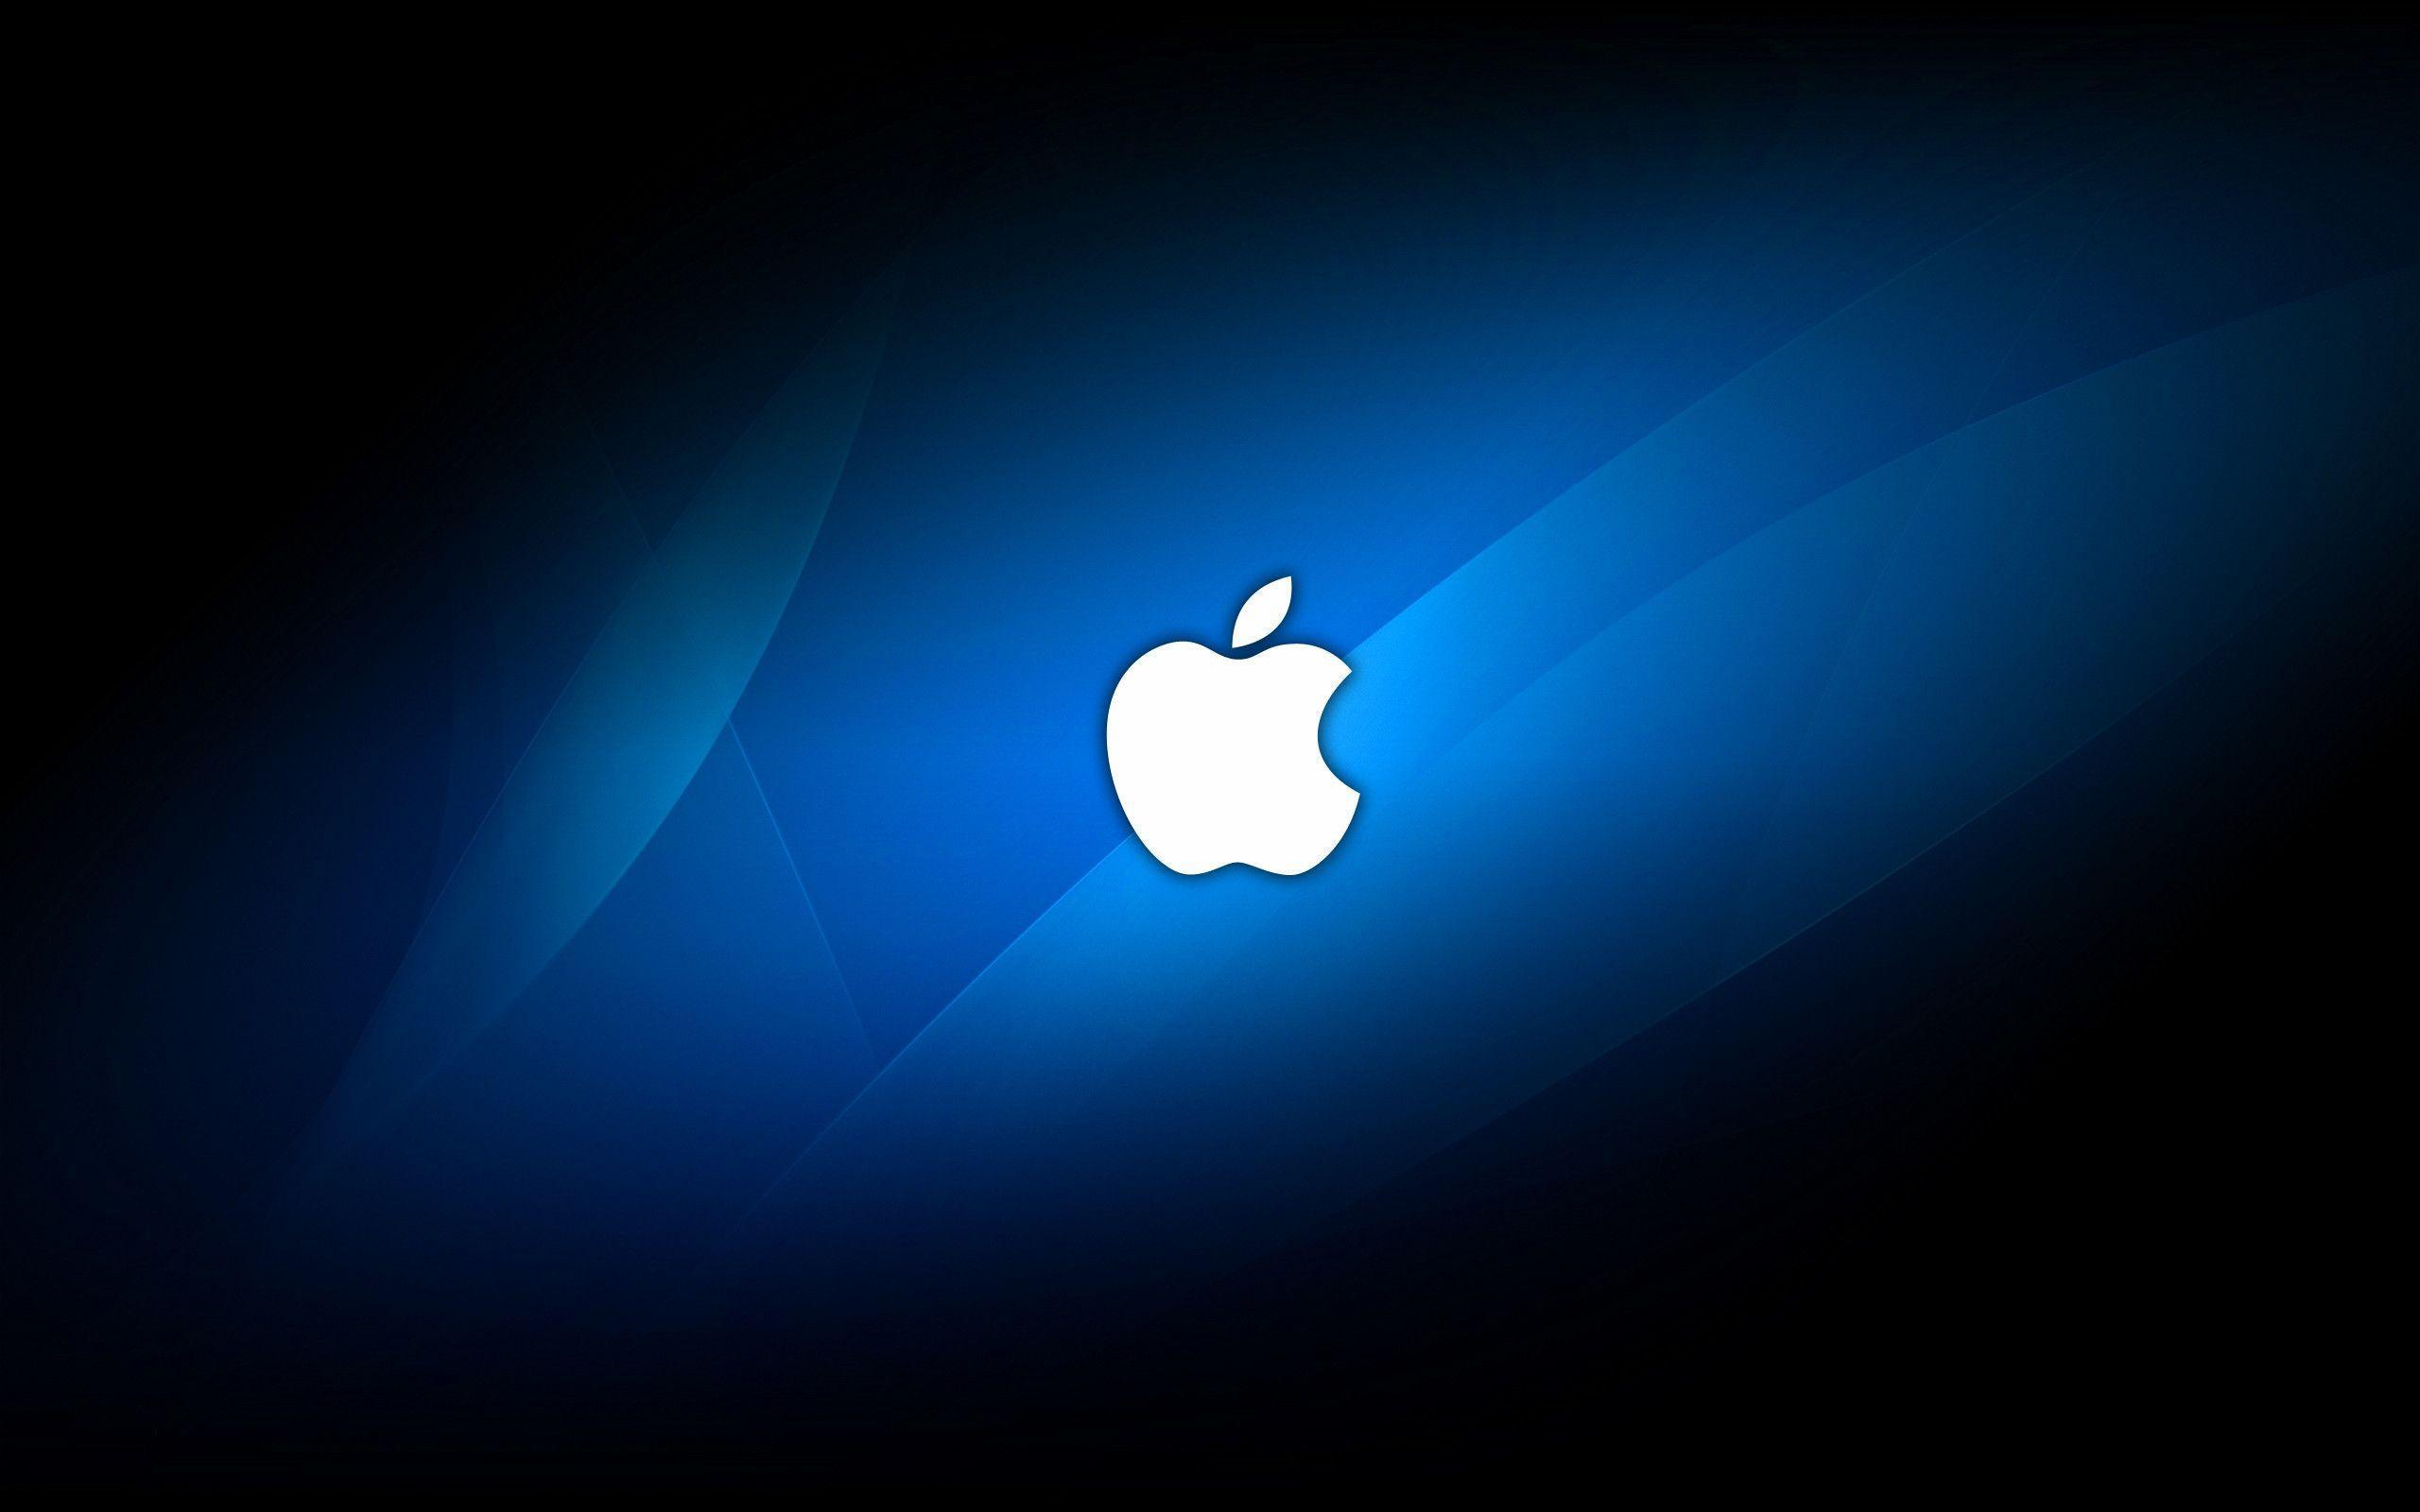 Apple Logo Wallpaper Hd: Apple Logo Wallpaper. .Ssofc